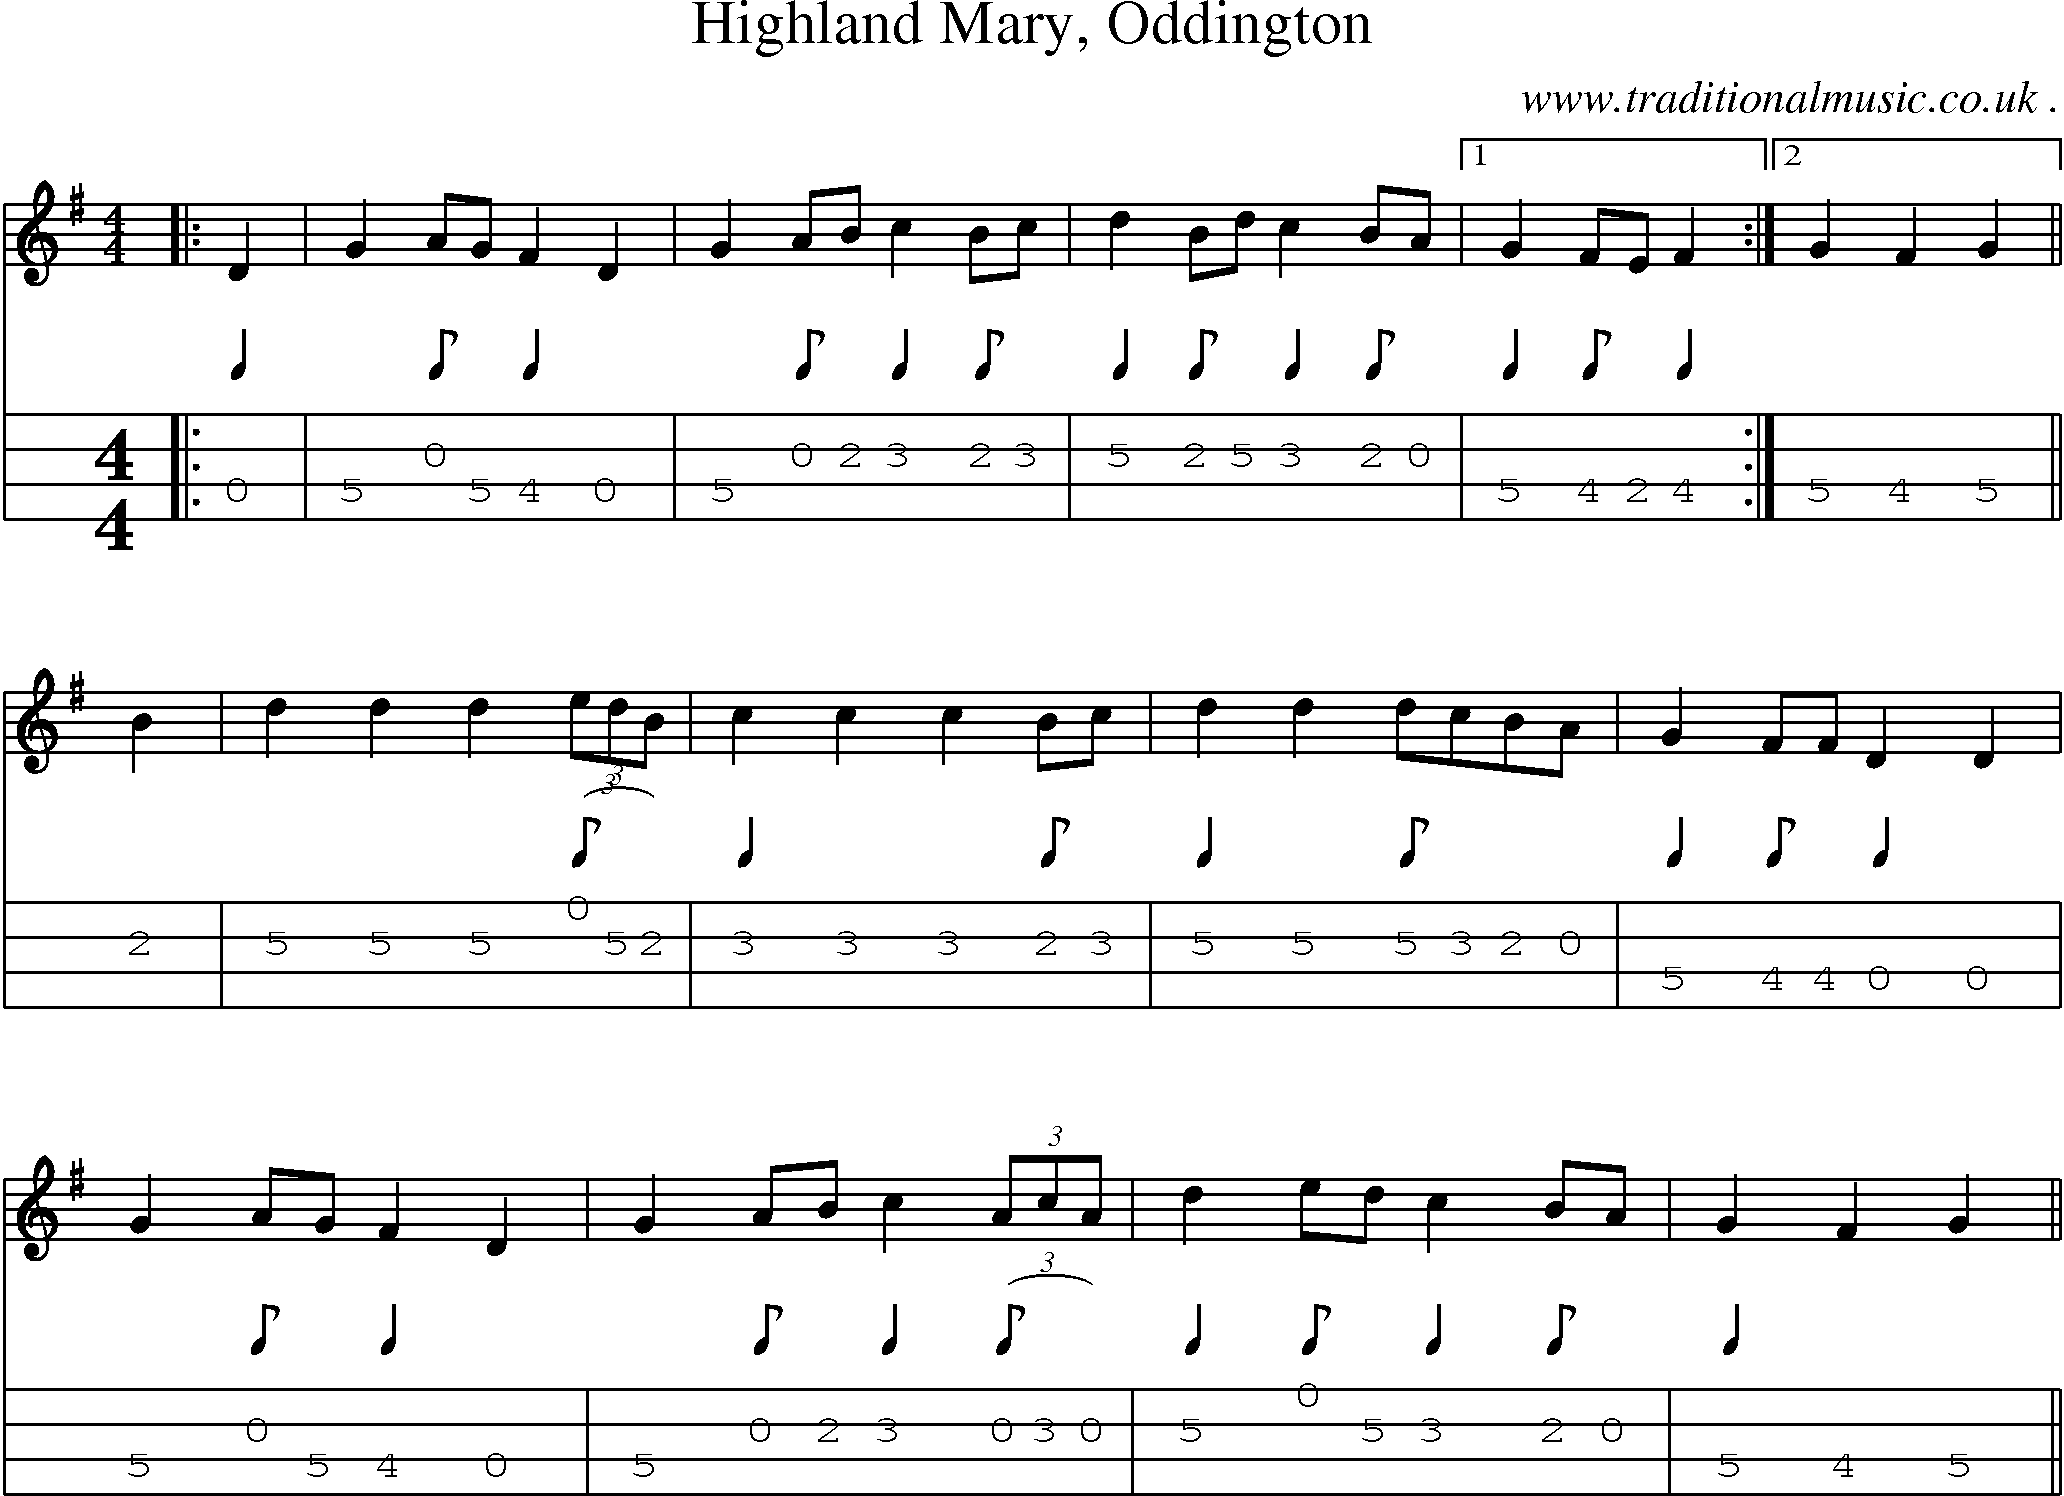 Sheet-Music and Mandolin Tabs for Highland Mary Oddington